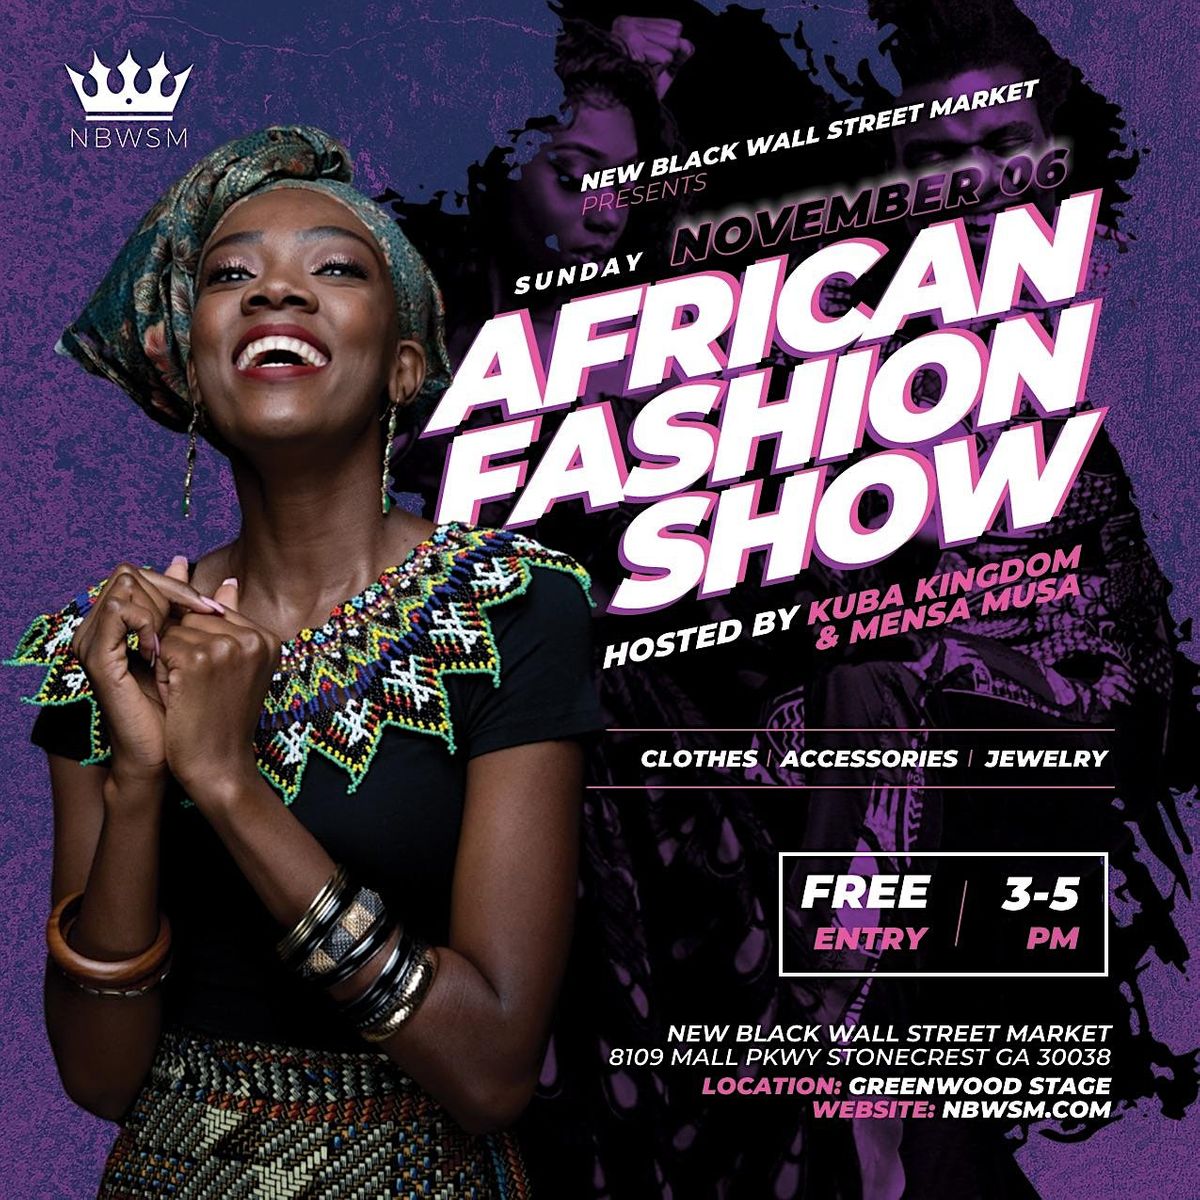 African Fashion Show | New Black Wall Street Market, Stonecrest, GA ...